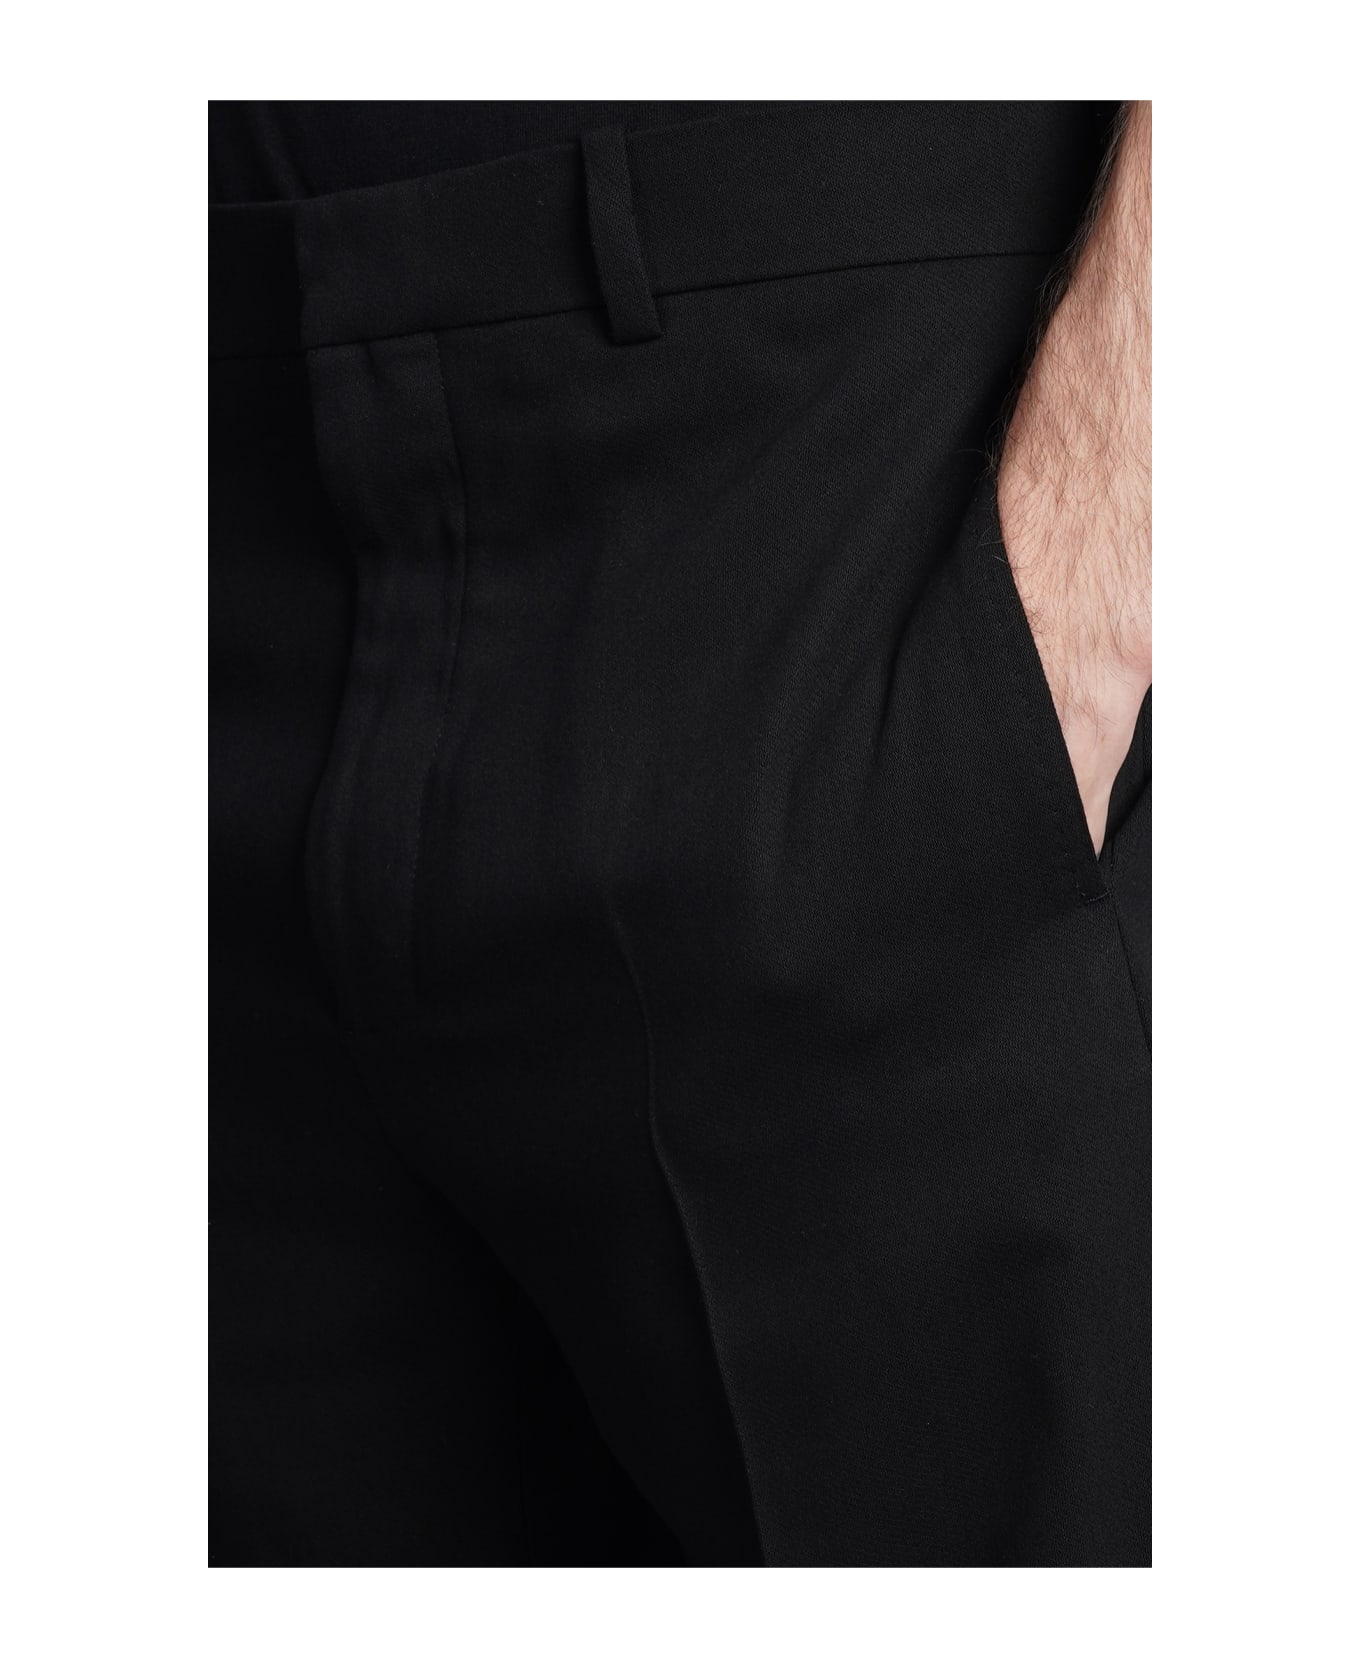 Ann Demeulemeester Pants In Black Wool - black